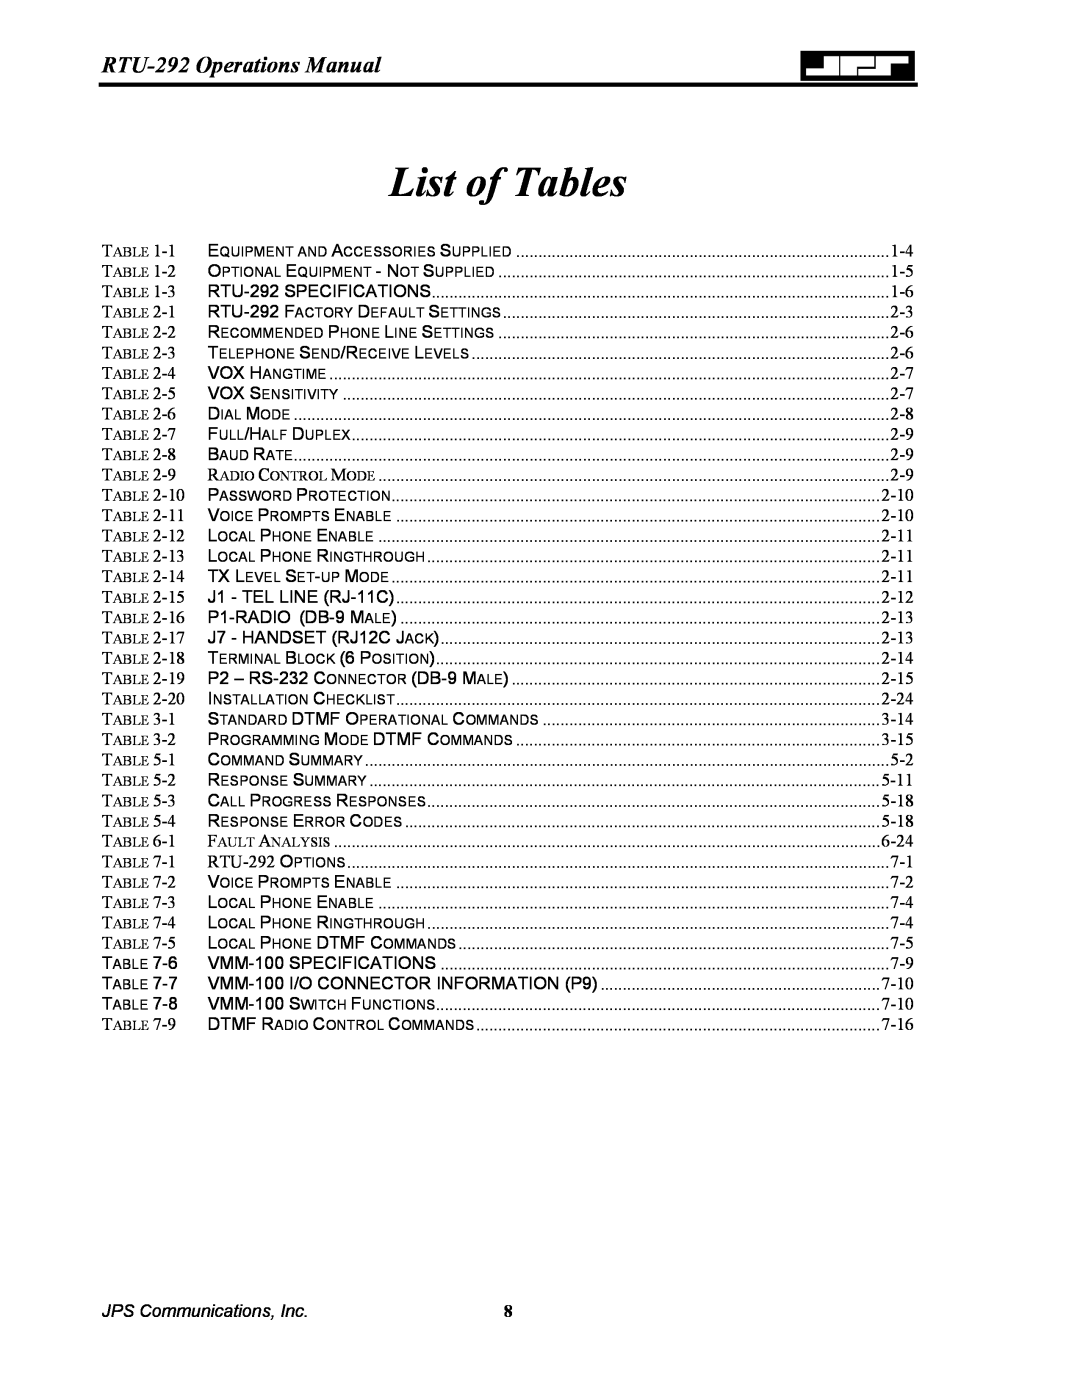 Nortel Networks operation manual List of Tables, RTU-292 Operations Manual, JPS Communications, Inc 